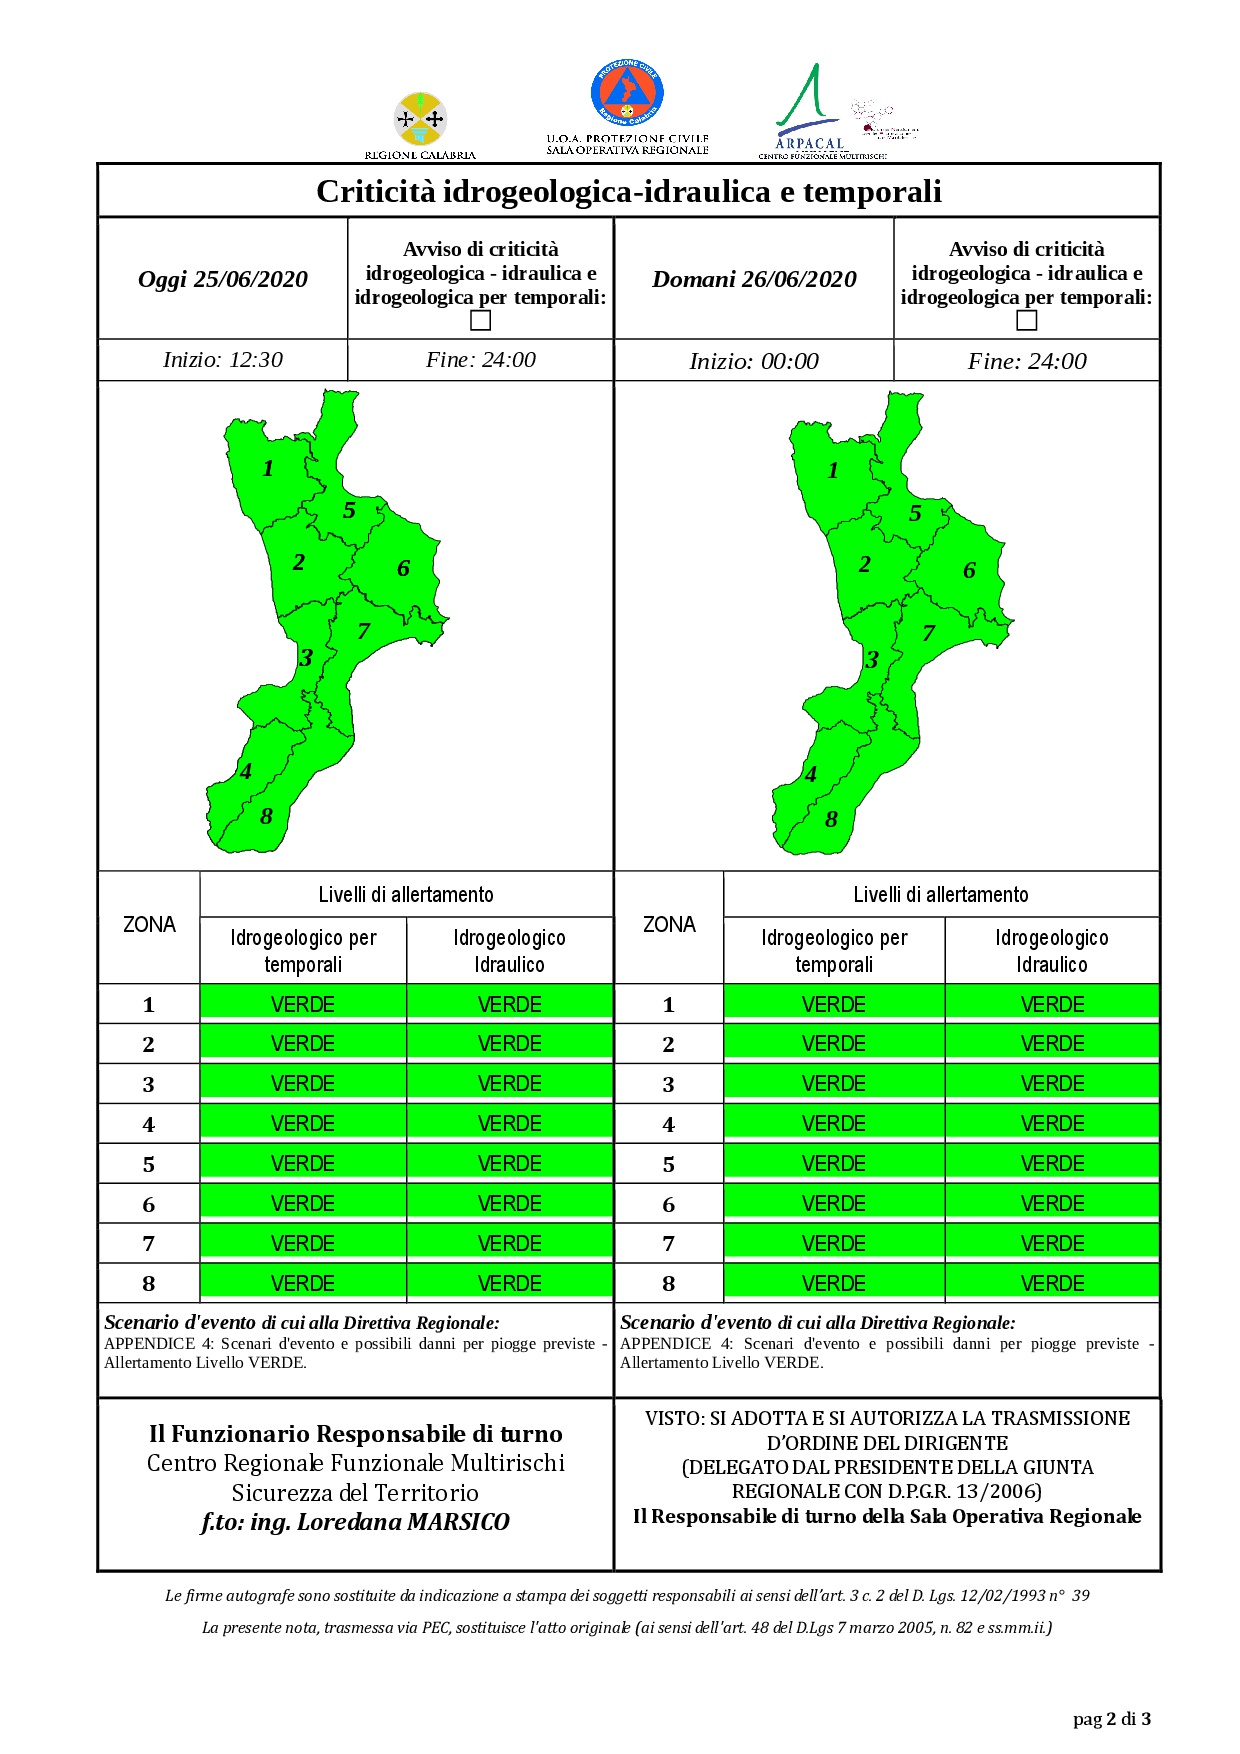 Criticità idrogeologica-idraulica e temporali in Calabria 25-06-2020